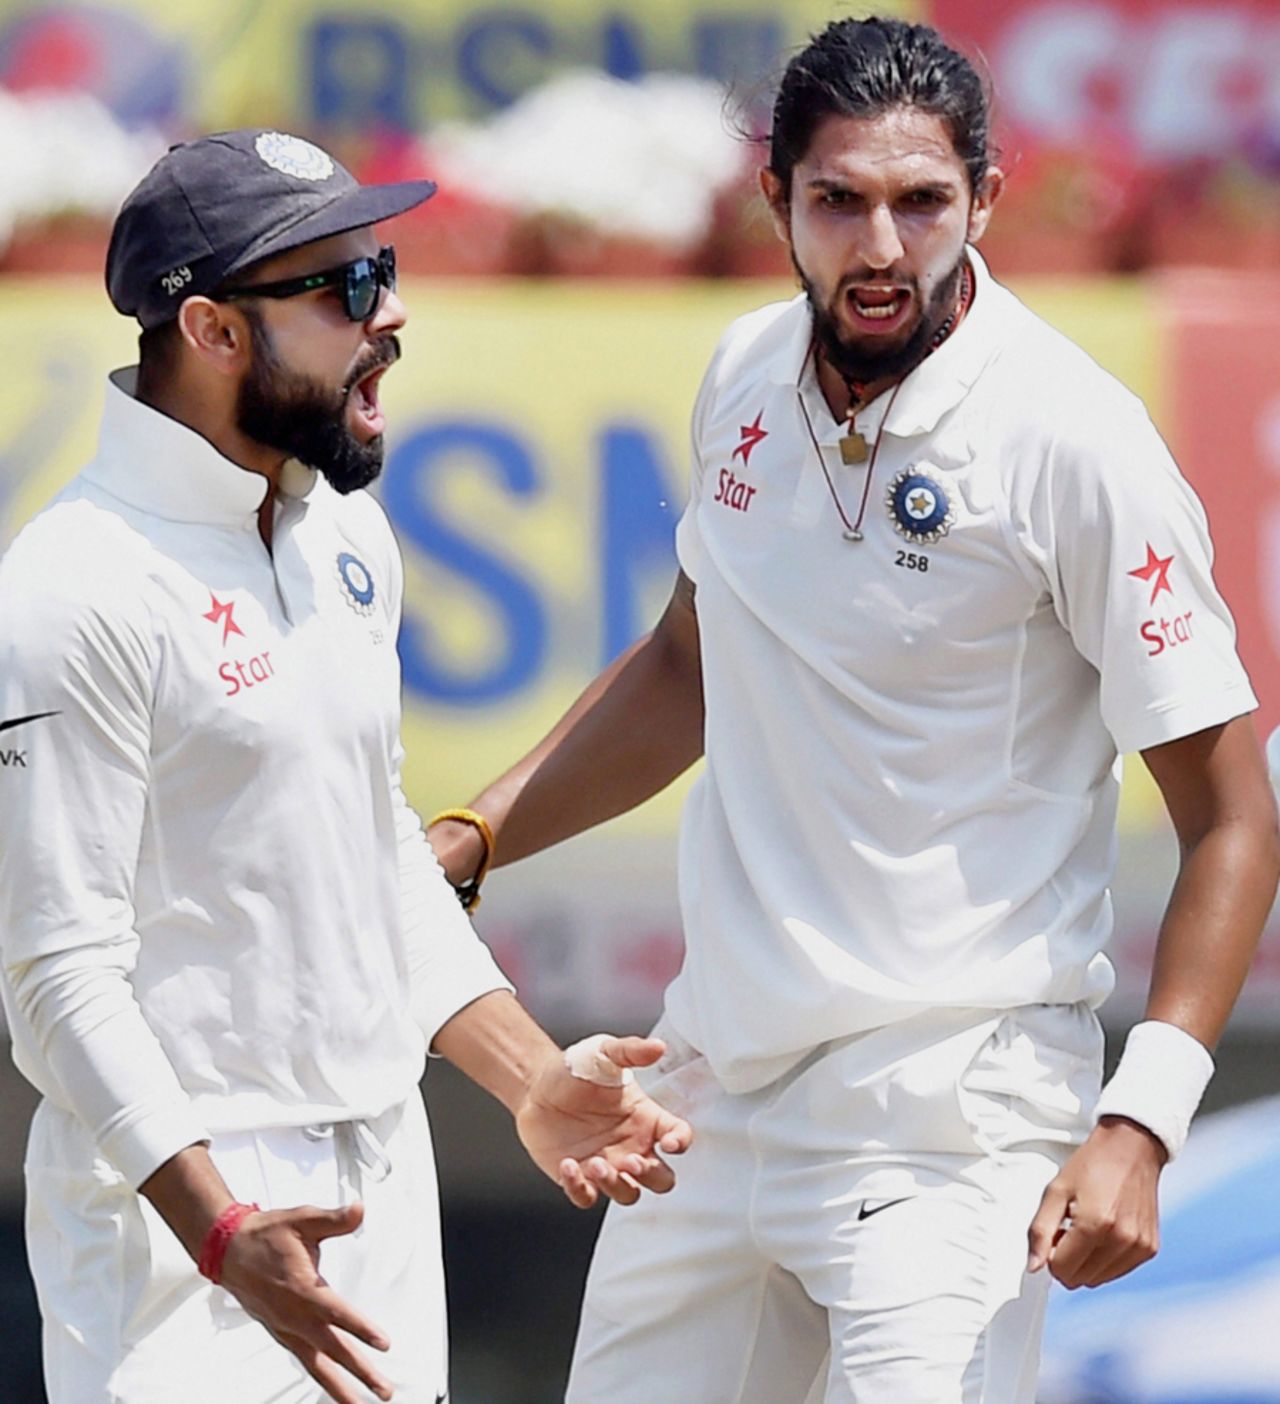 Virat Kohli and Ishant Sharma celebrate a wicket, India v Australia, 3rd Test, Ranchi, 5th day, March 20, 2017

